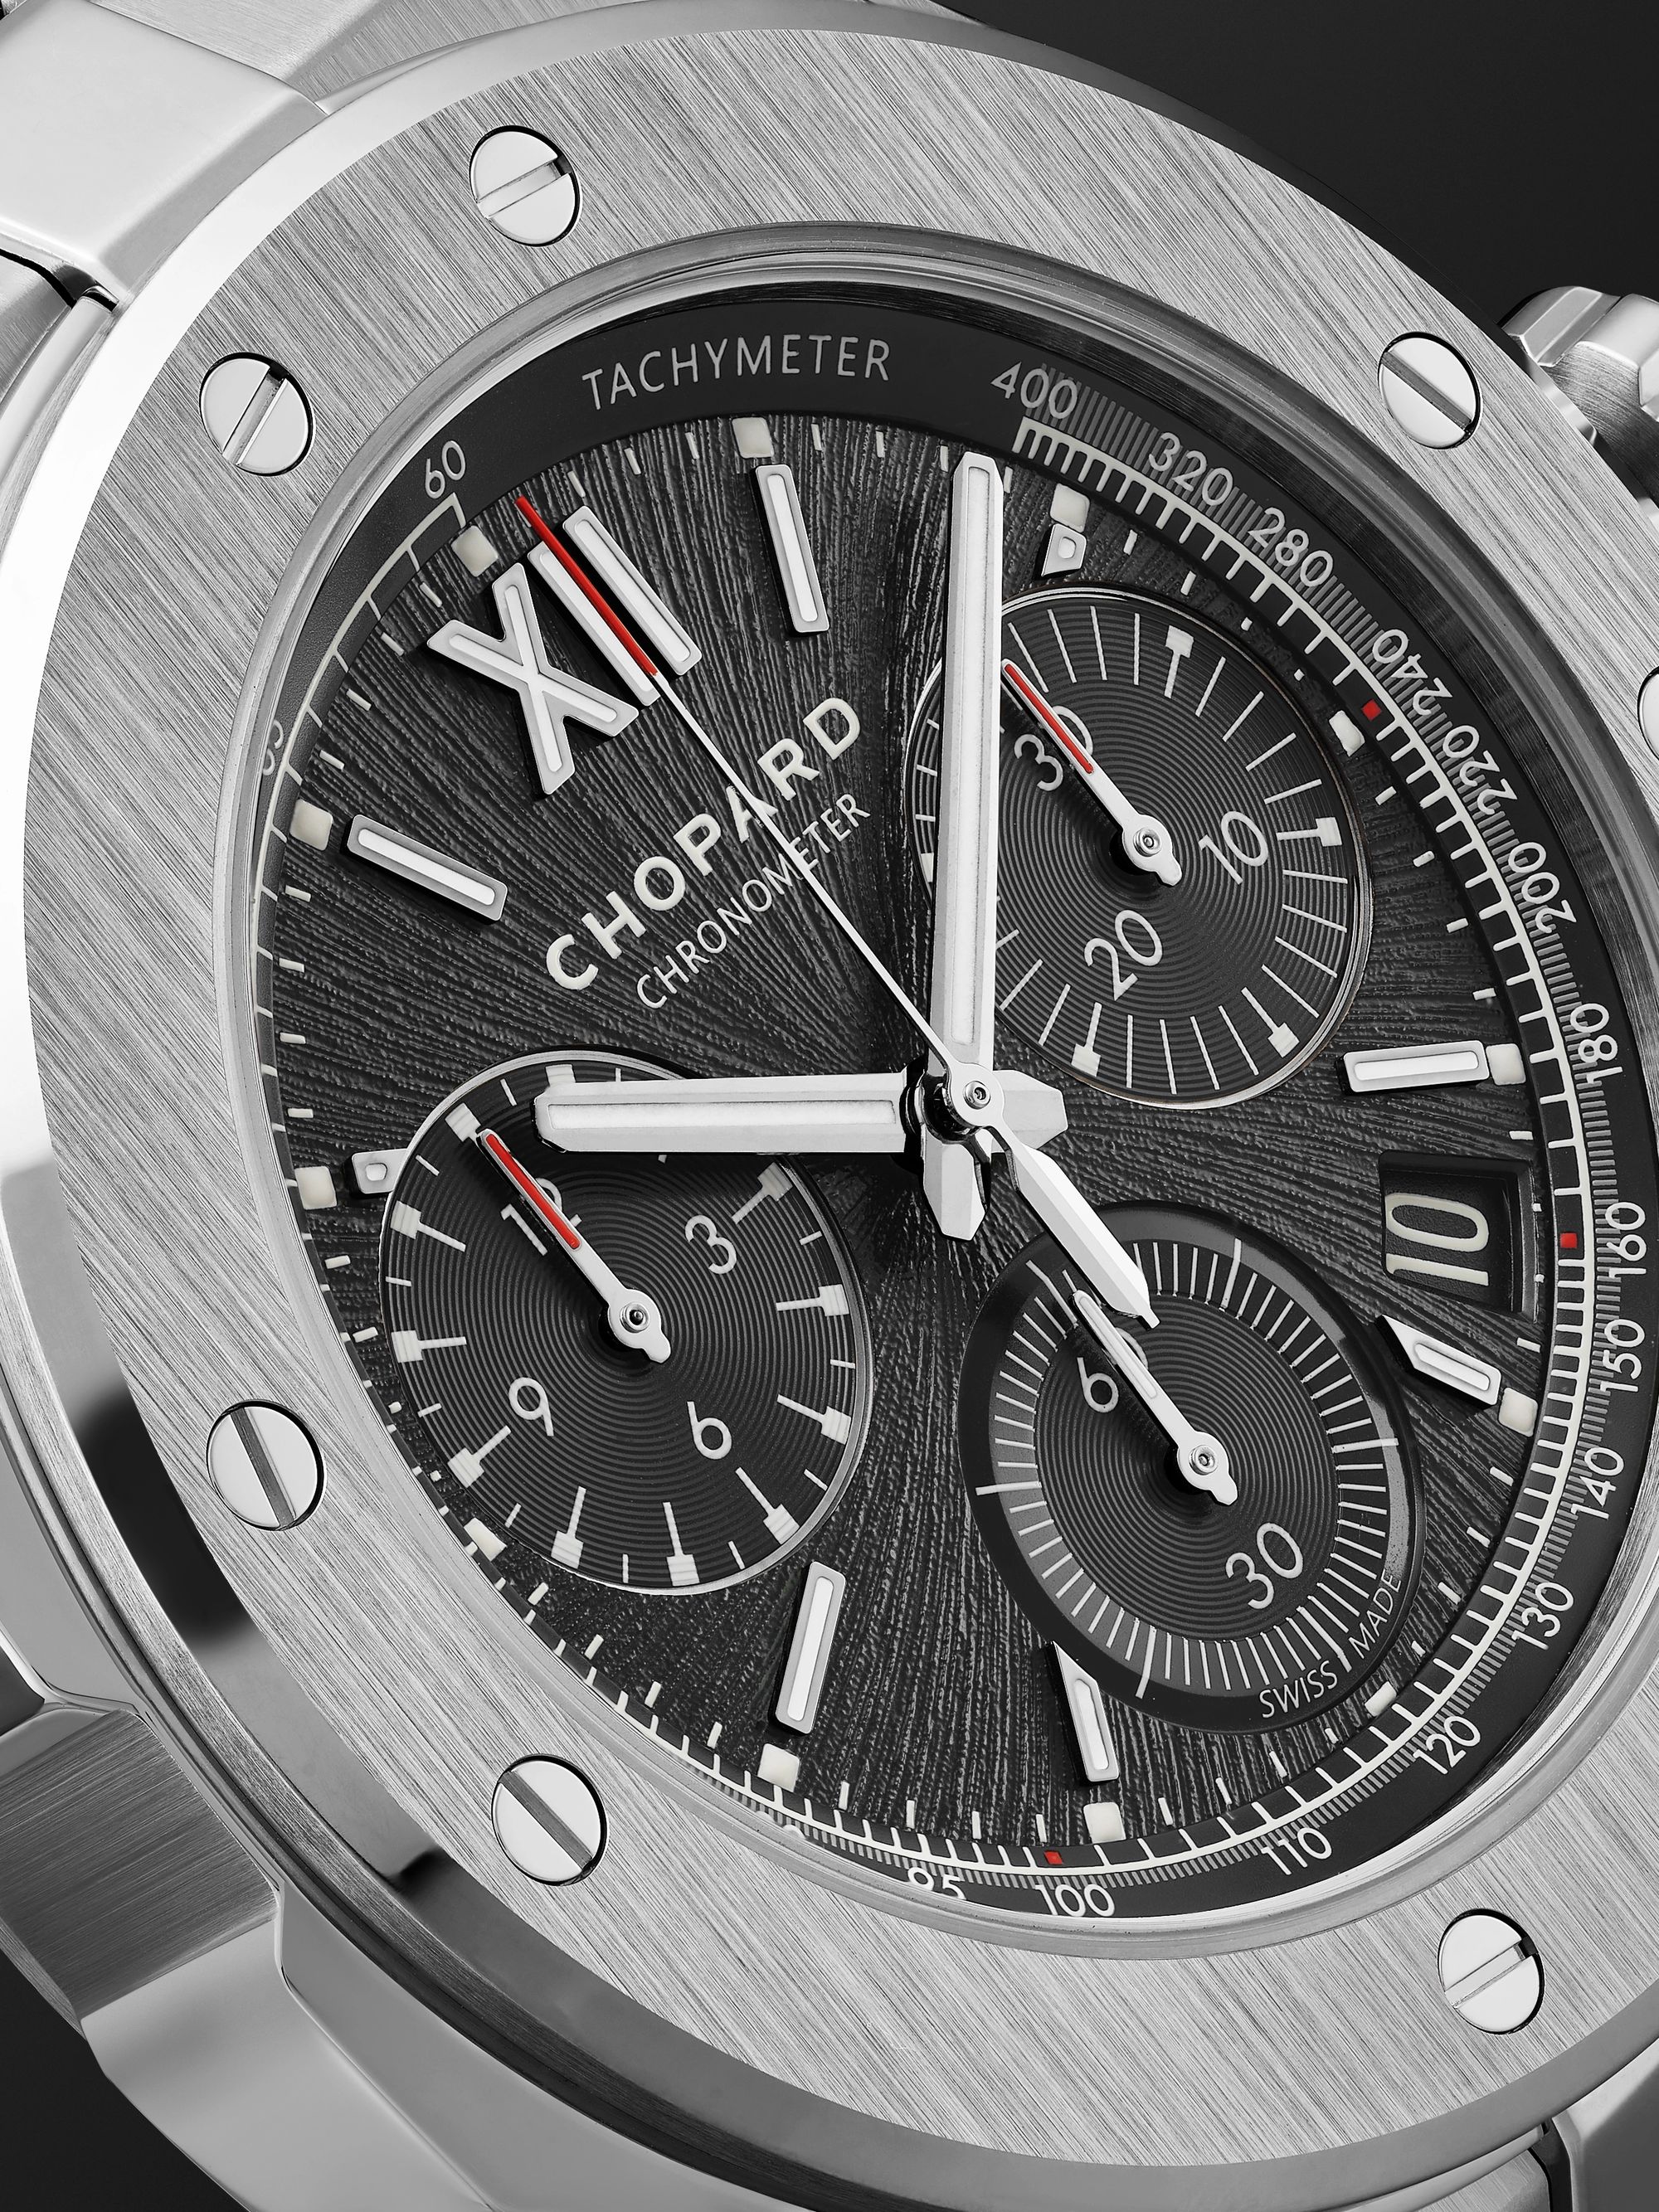 CHOPARD Alpine Eagle XL Chrono Automatic 44mm Lucent Steel Watch, Ref. No. 298609-3002